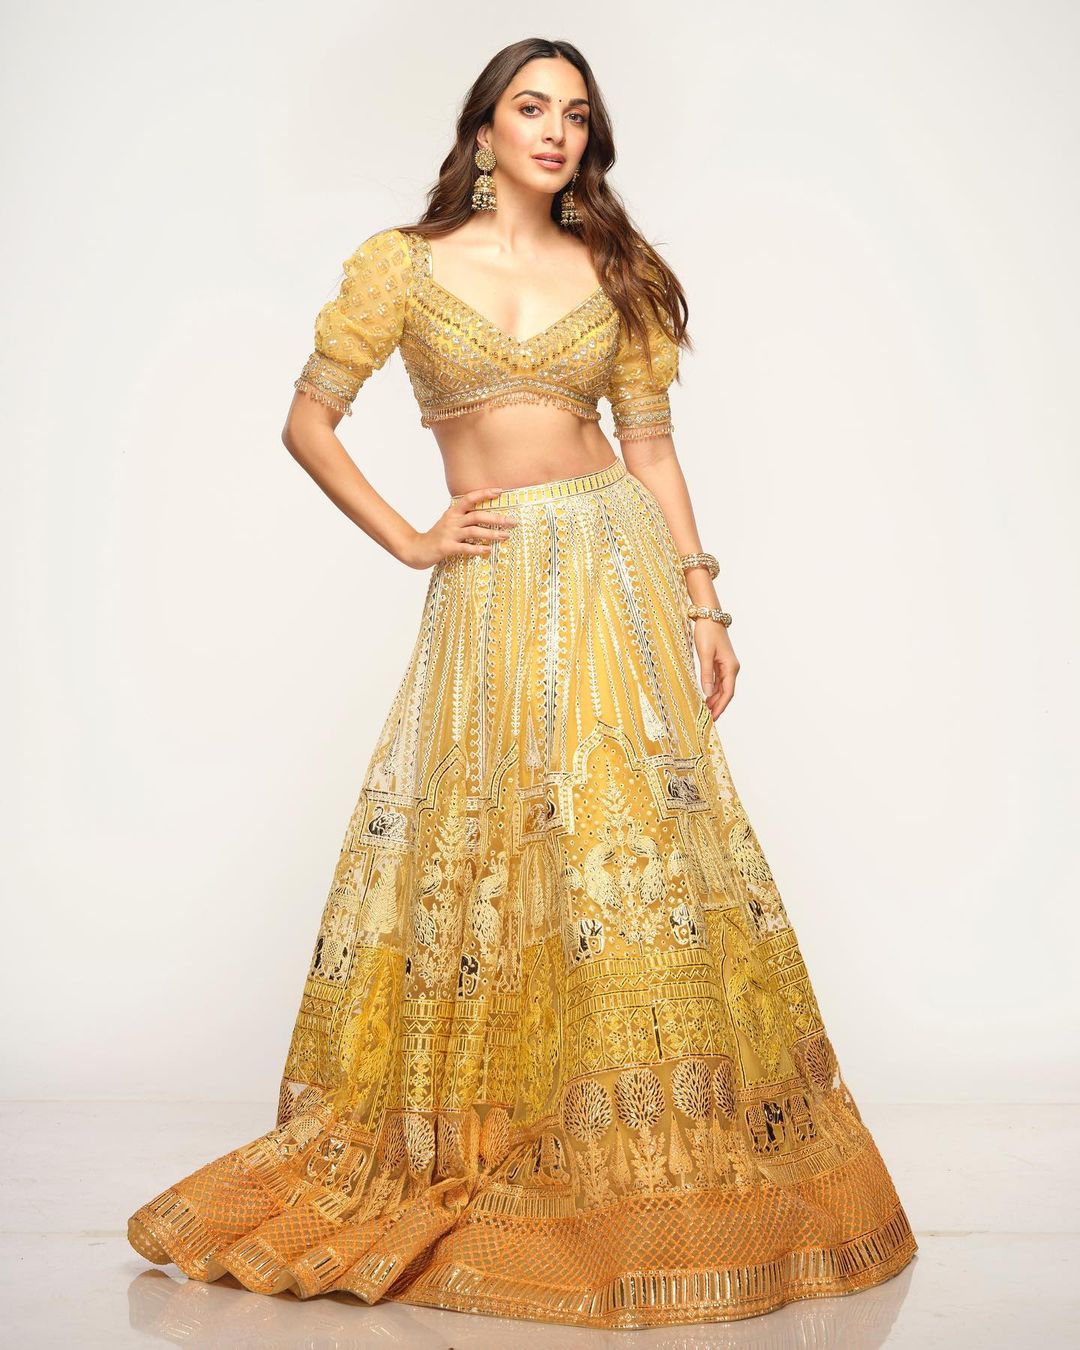 Kiara Advani Glitters in shine In A Stunning Falguni Shane Peacock Yellow  Ombre Lehenga